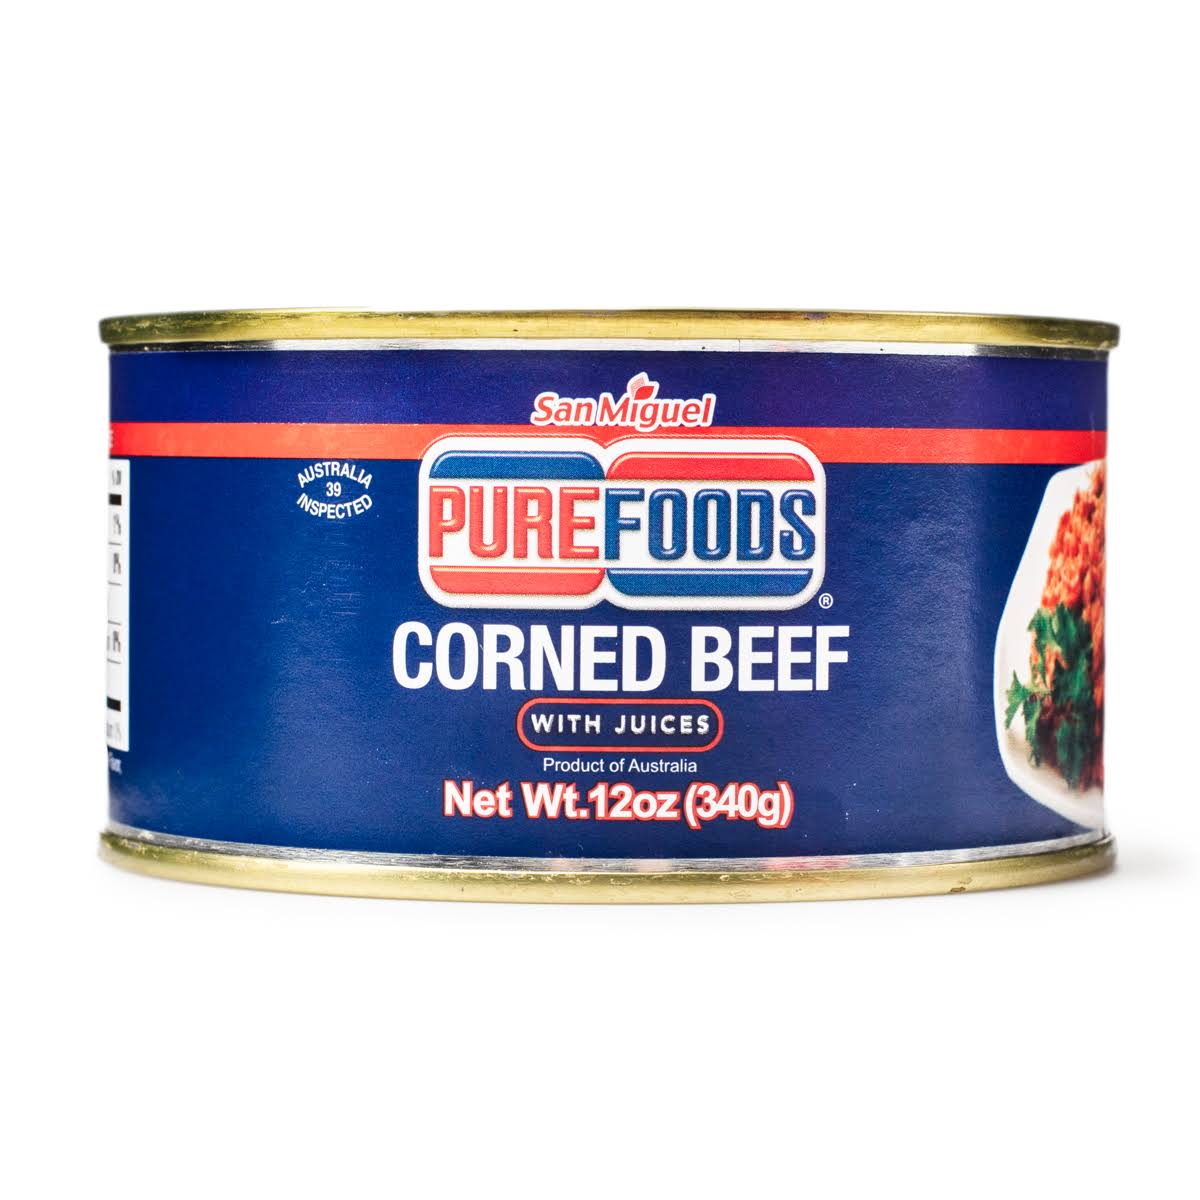 San Miguel Purefoods Canned Goods Corned Beef (Australia) 12 oz